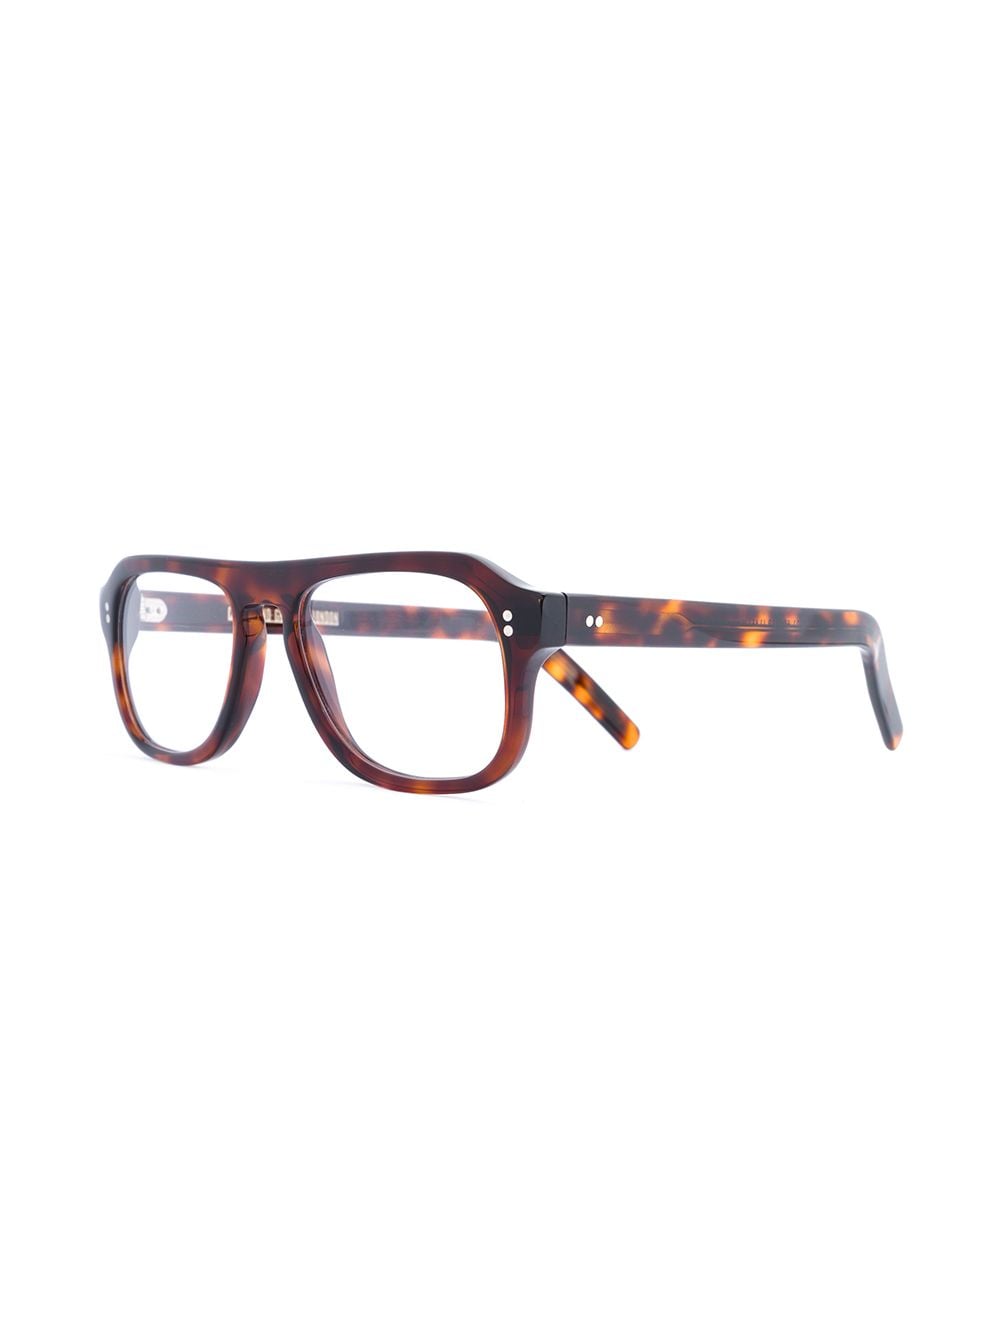 cutler & gross square frame glasses - brown